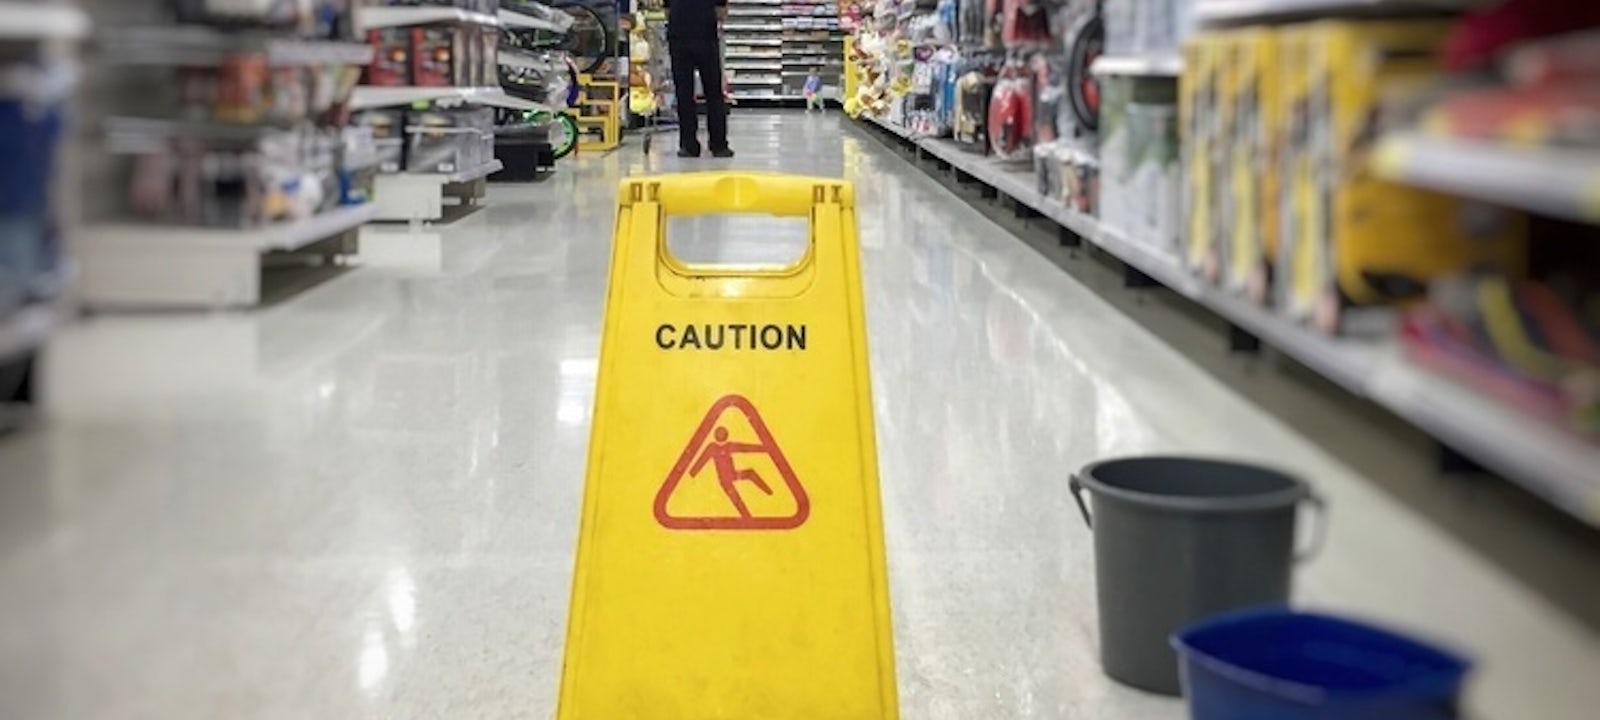 Caution sign at supermarket